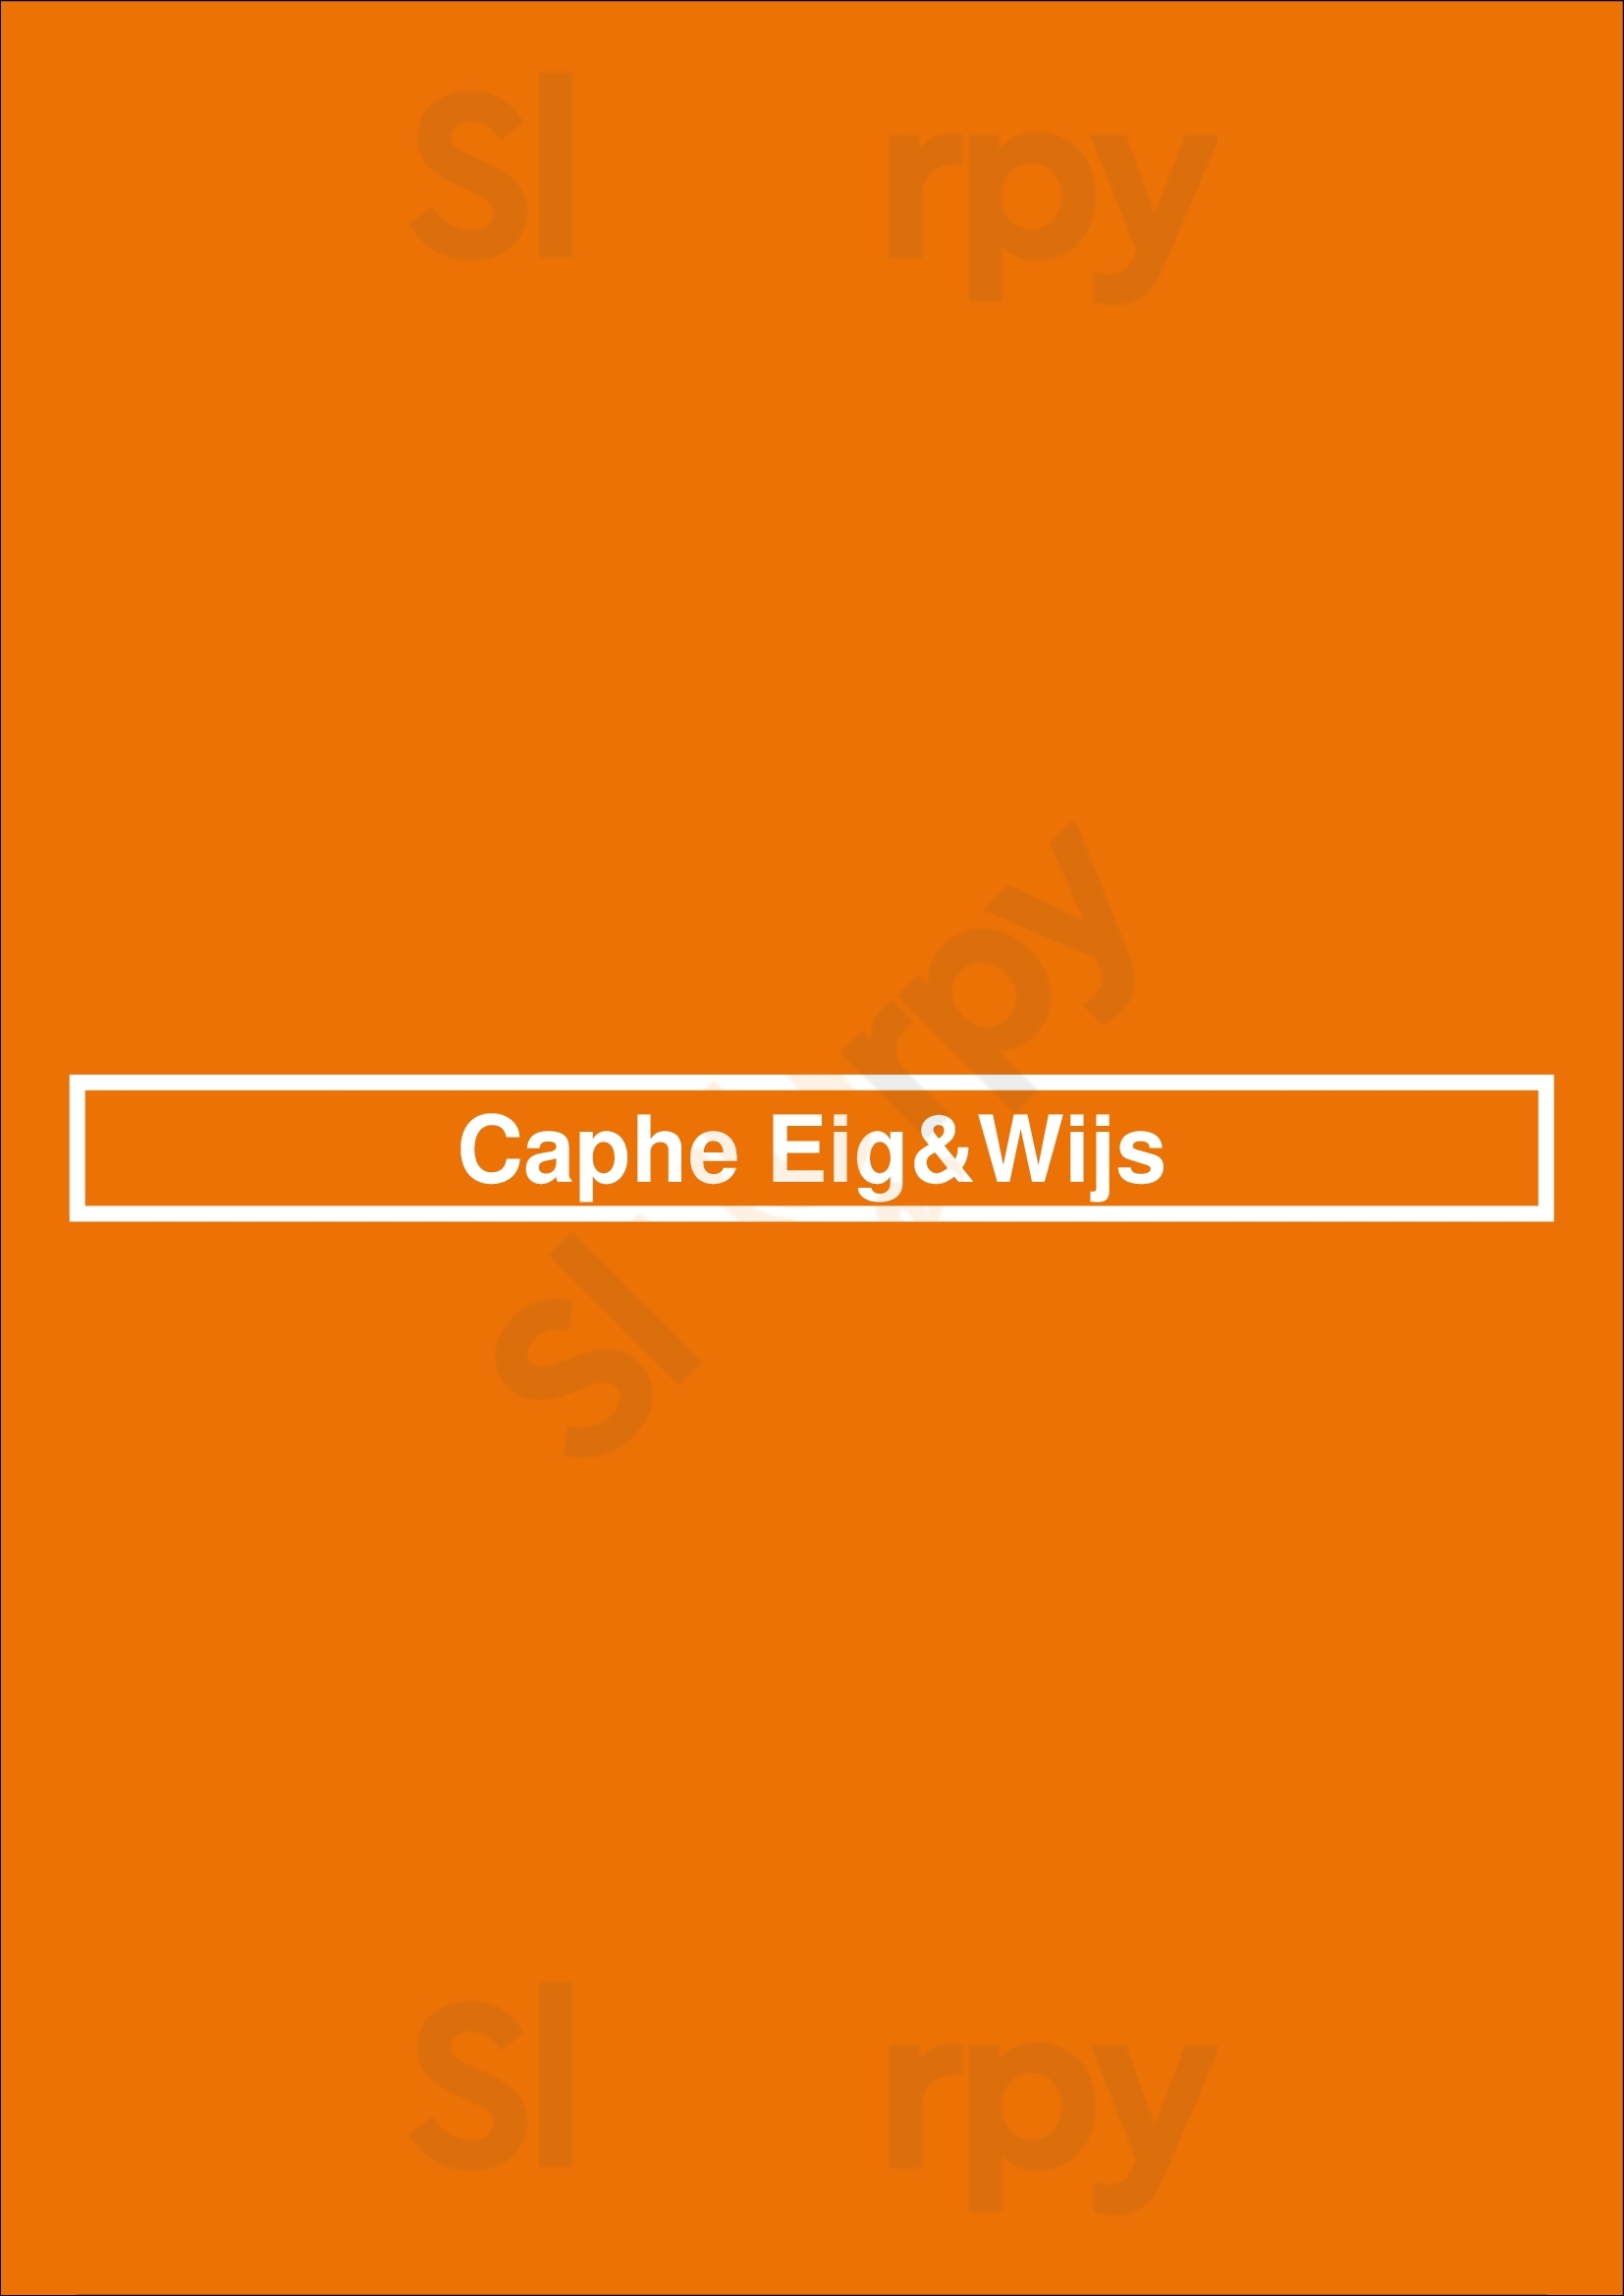 Caphe Eig&wijs Hilversum Menu - 1